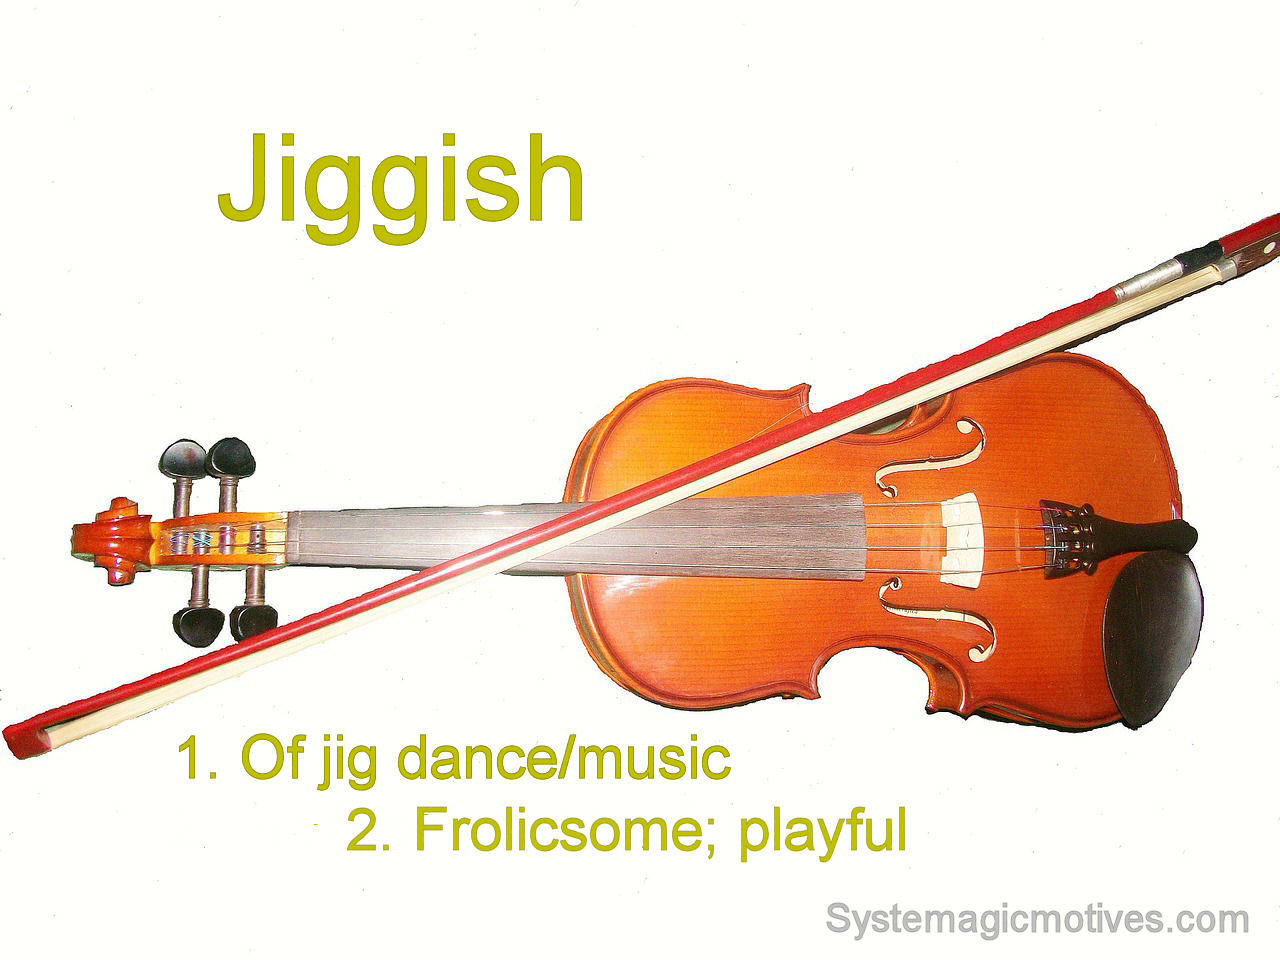 The definition of Jiggish